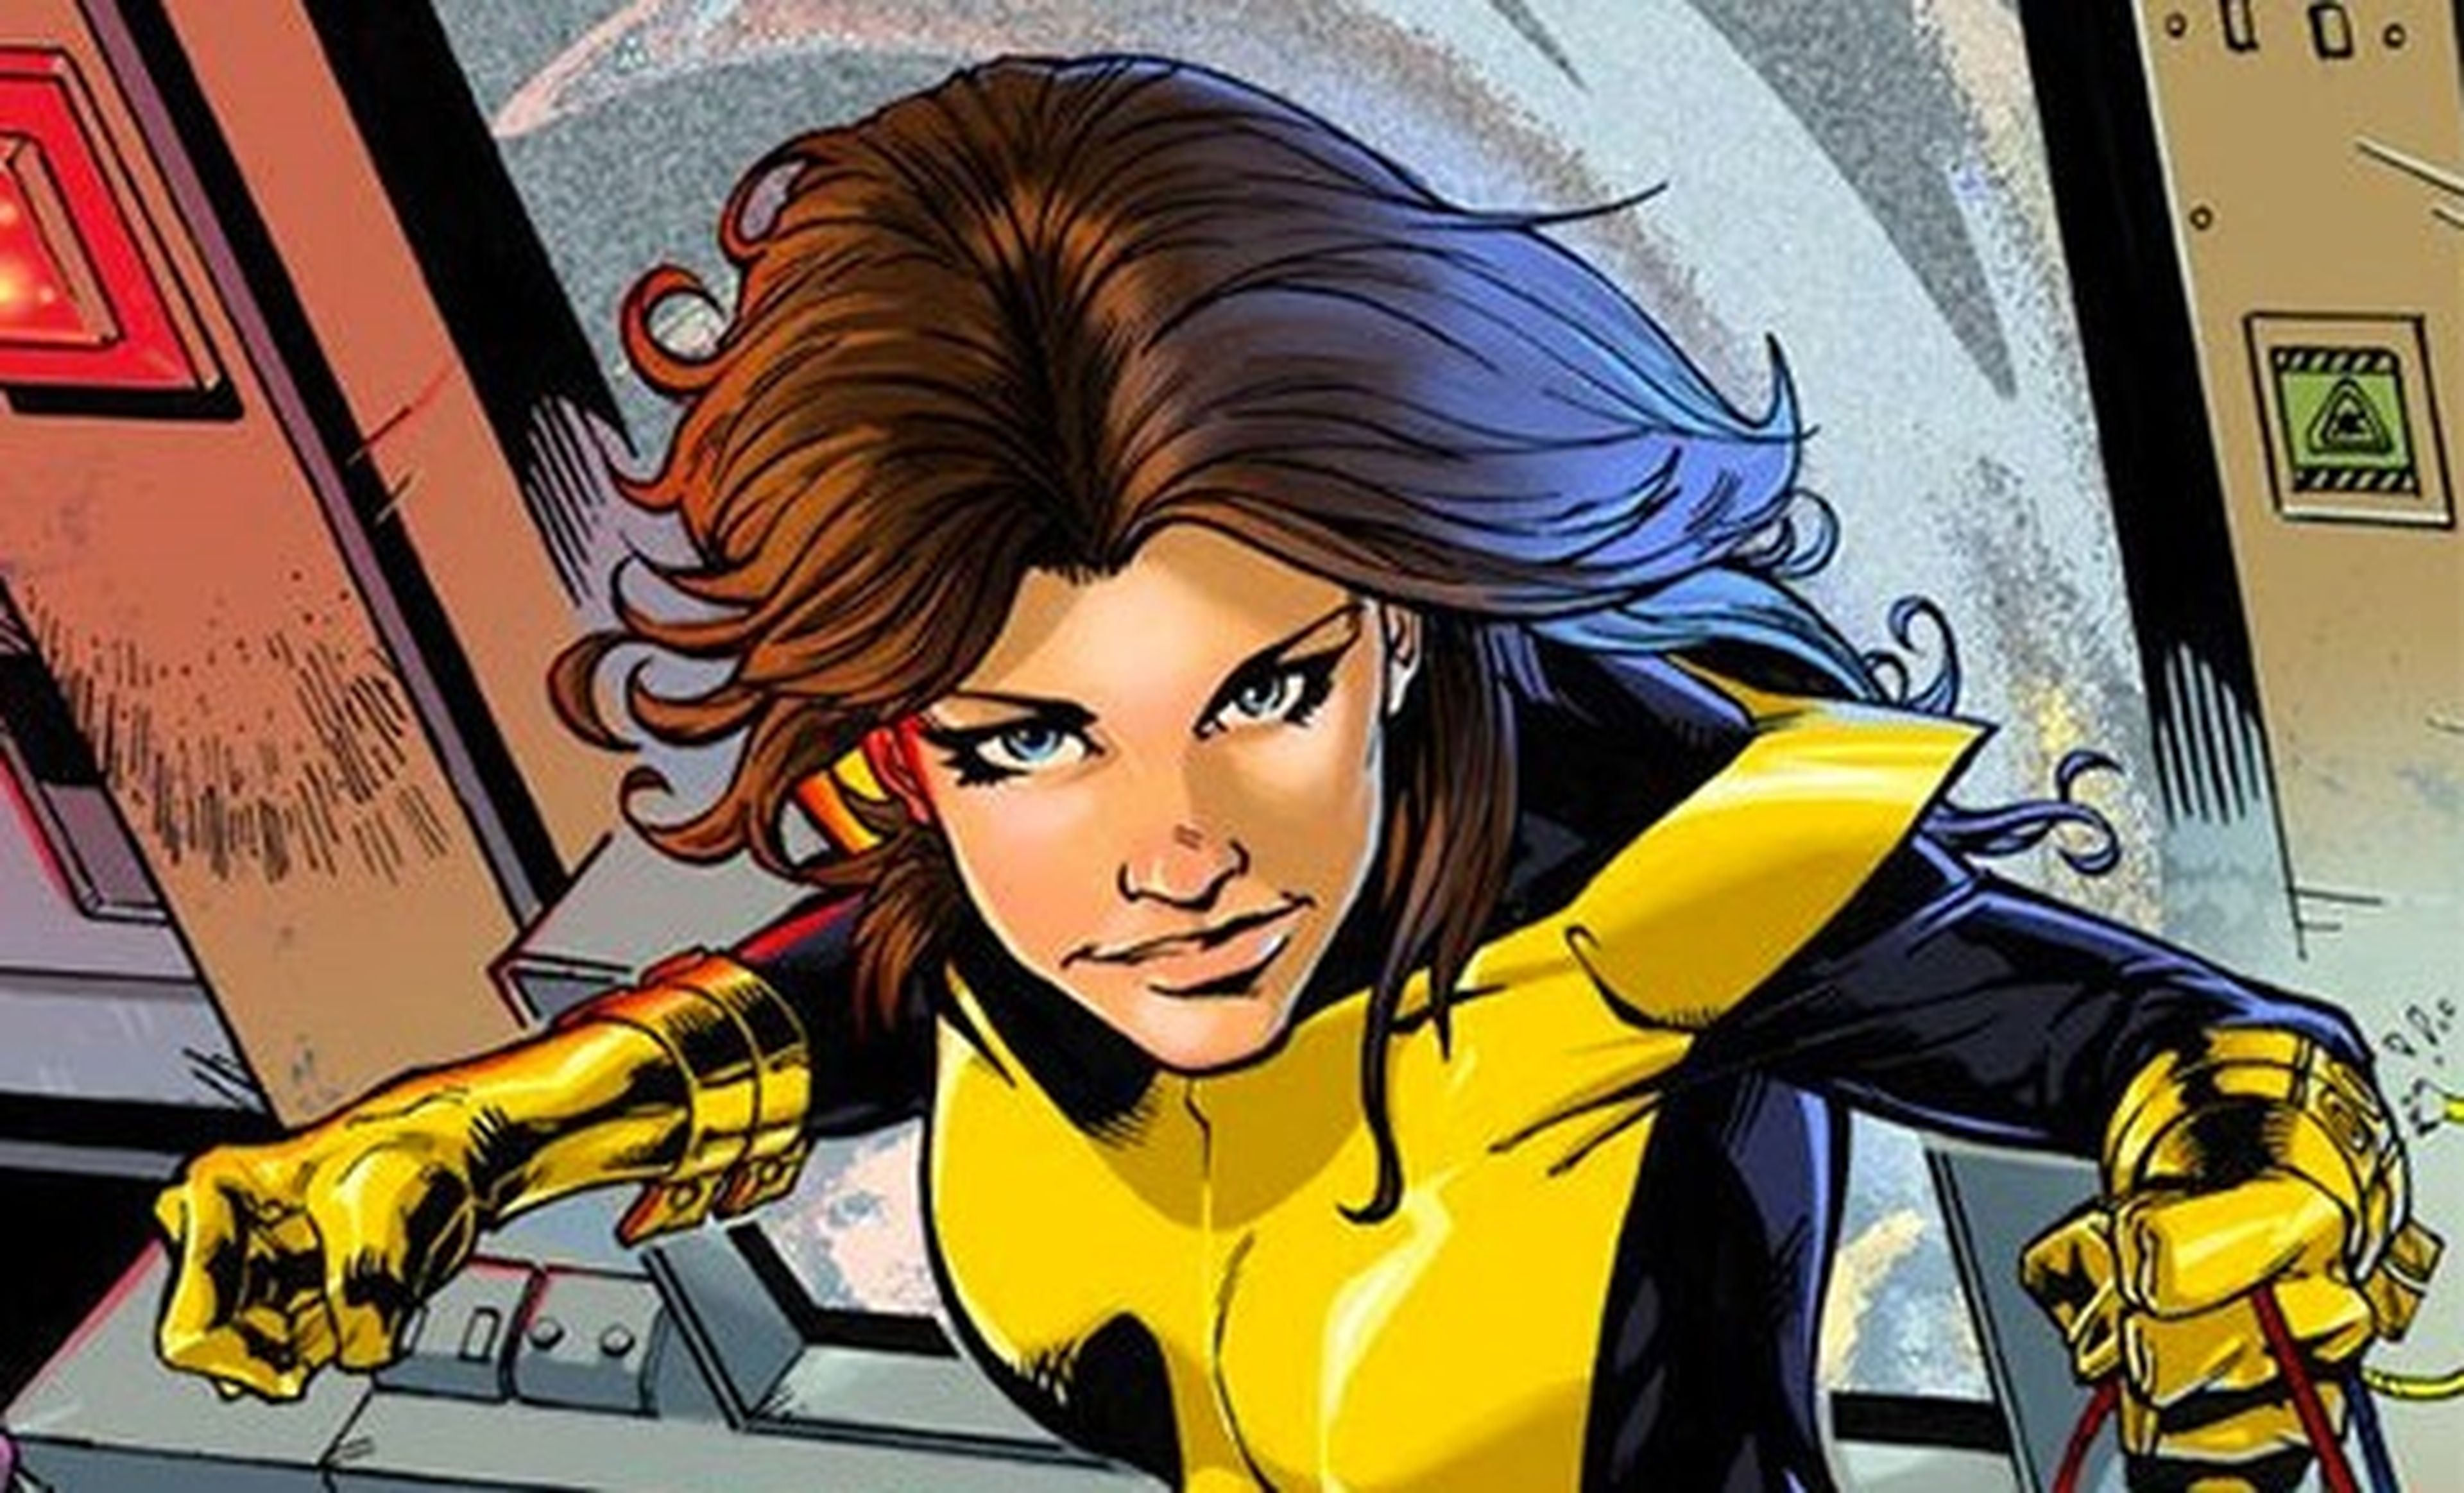 Posible nueva película de X-Men con Kitty Pryde